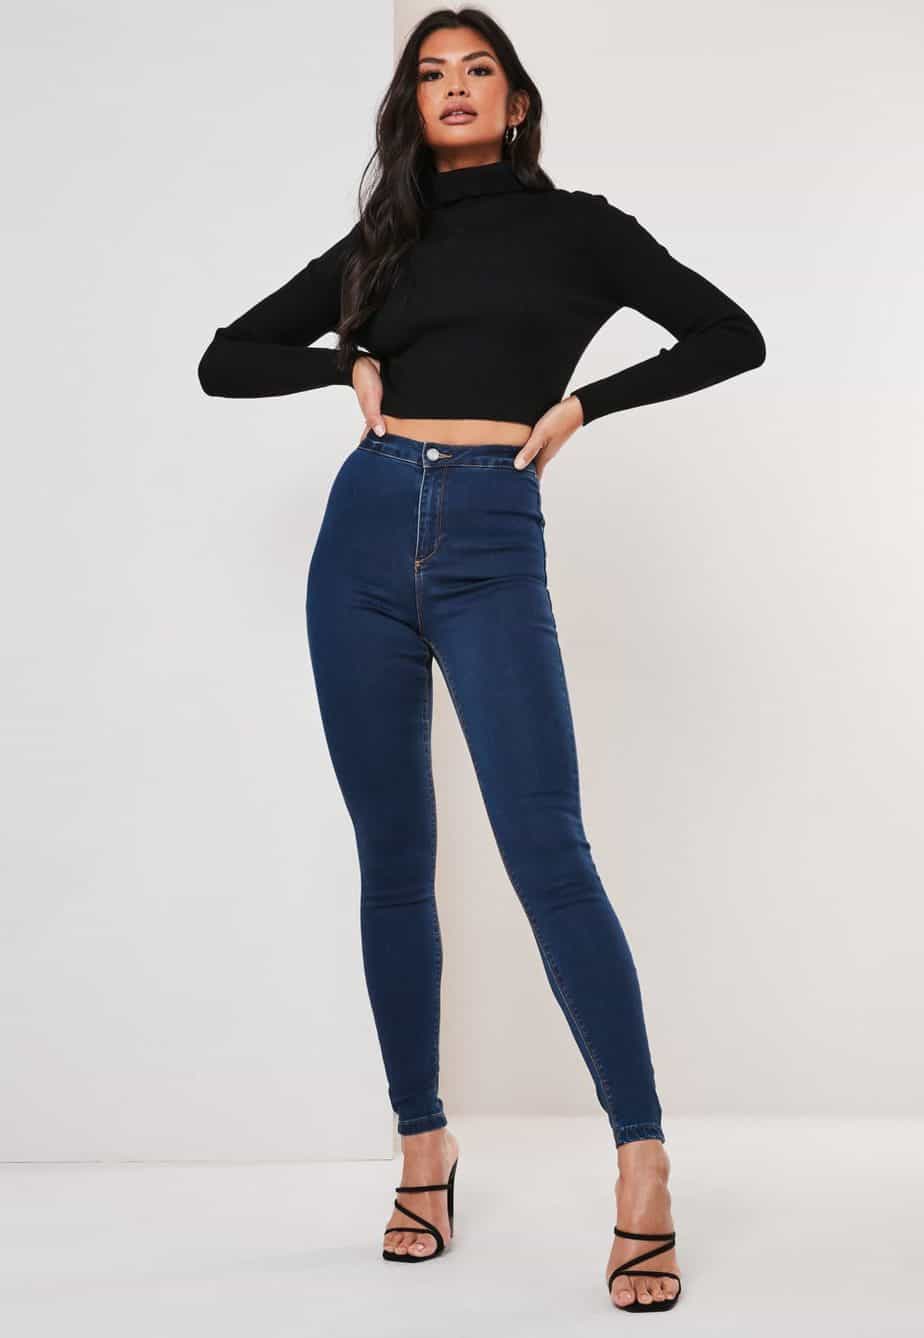 Blue Vice High Waisted Skinny Jeans 1061x1536 